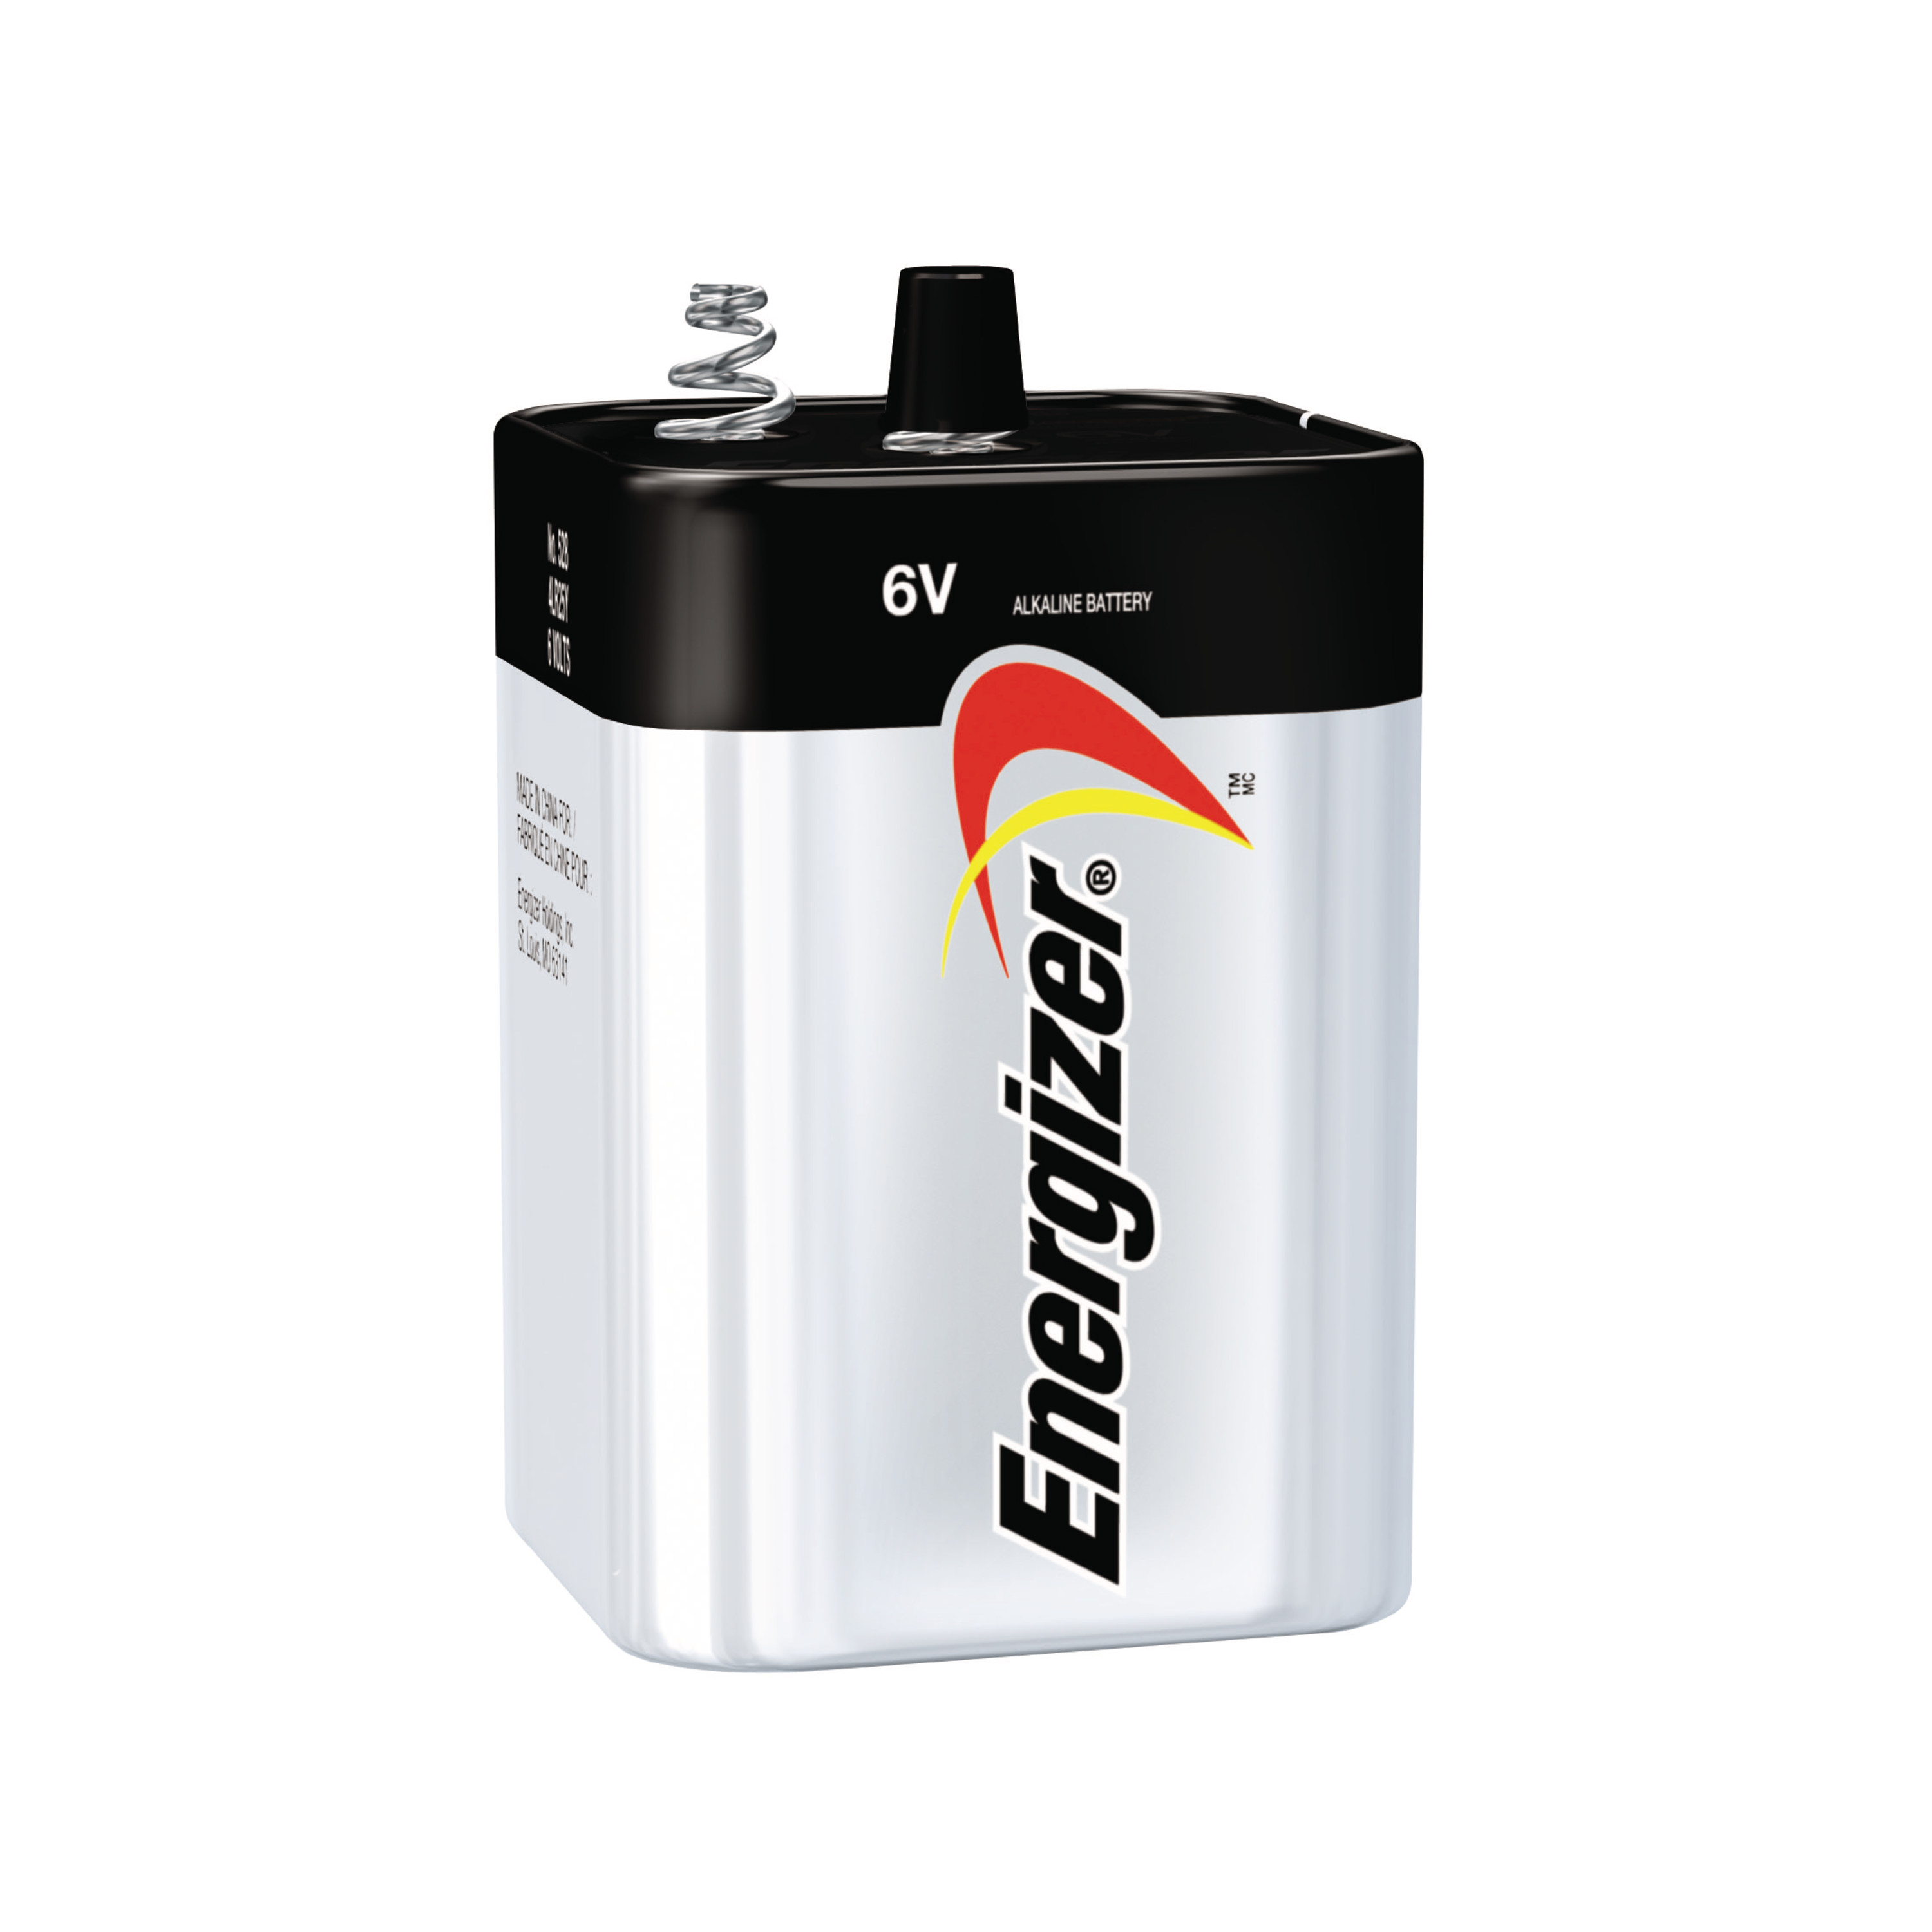 Energizer Max 529 Alkaline Spring Terminal Lantern Battery, 6V - image 1 of 8